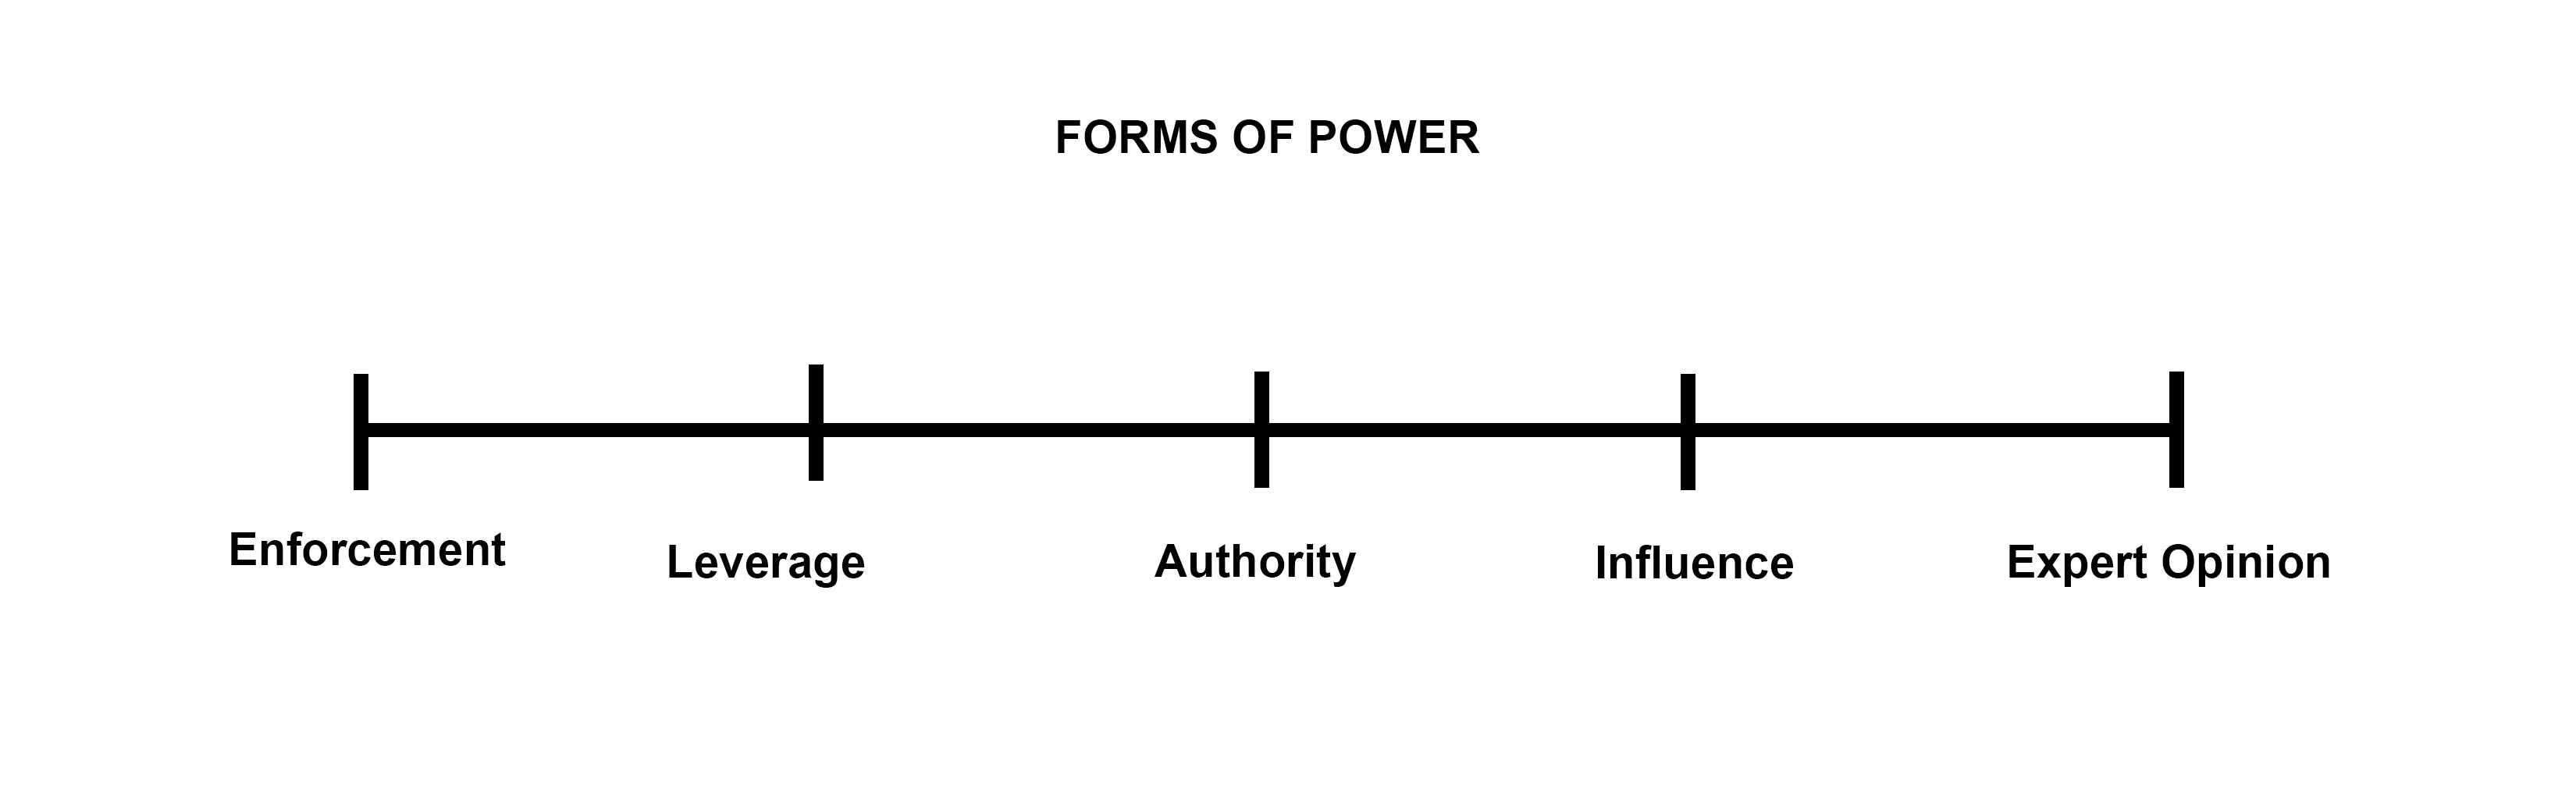 Forms of Power Spectrum.jpg